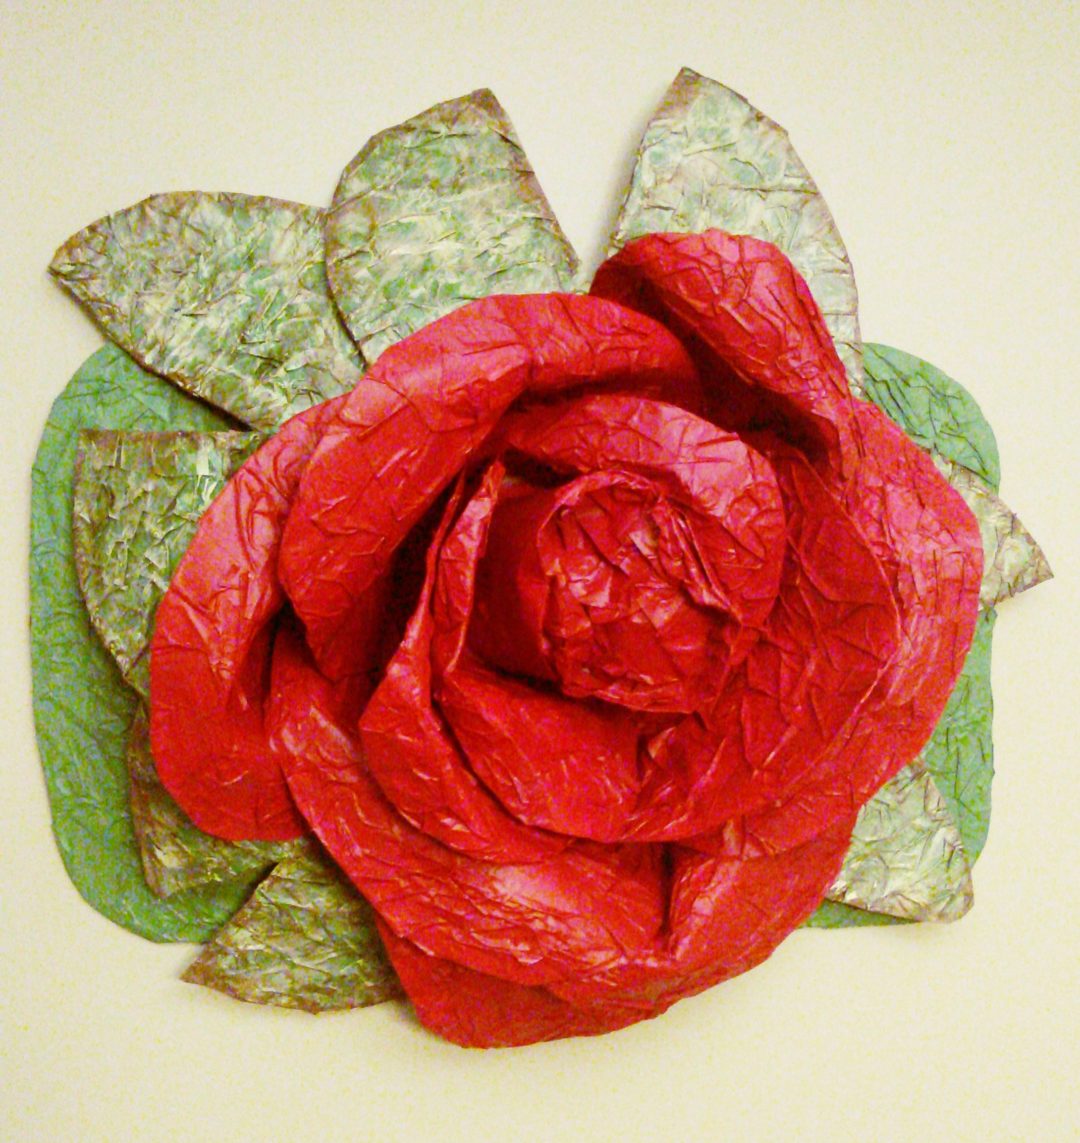 Rose Wall Art